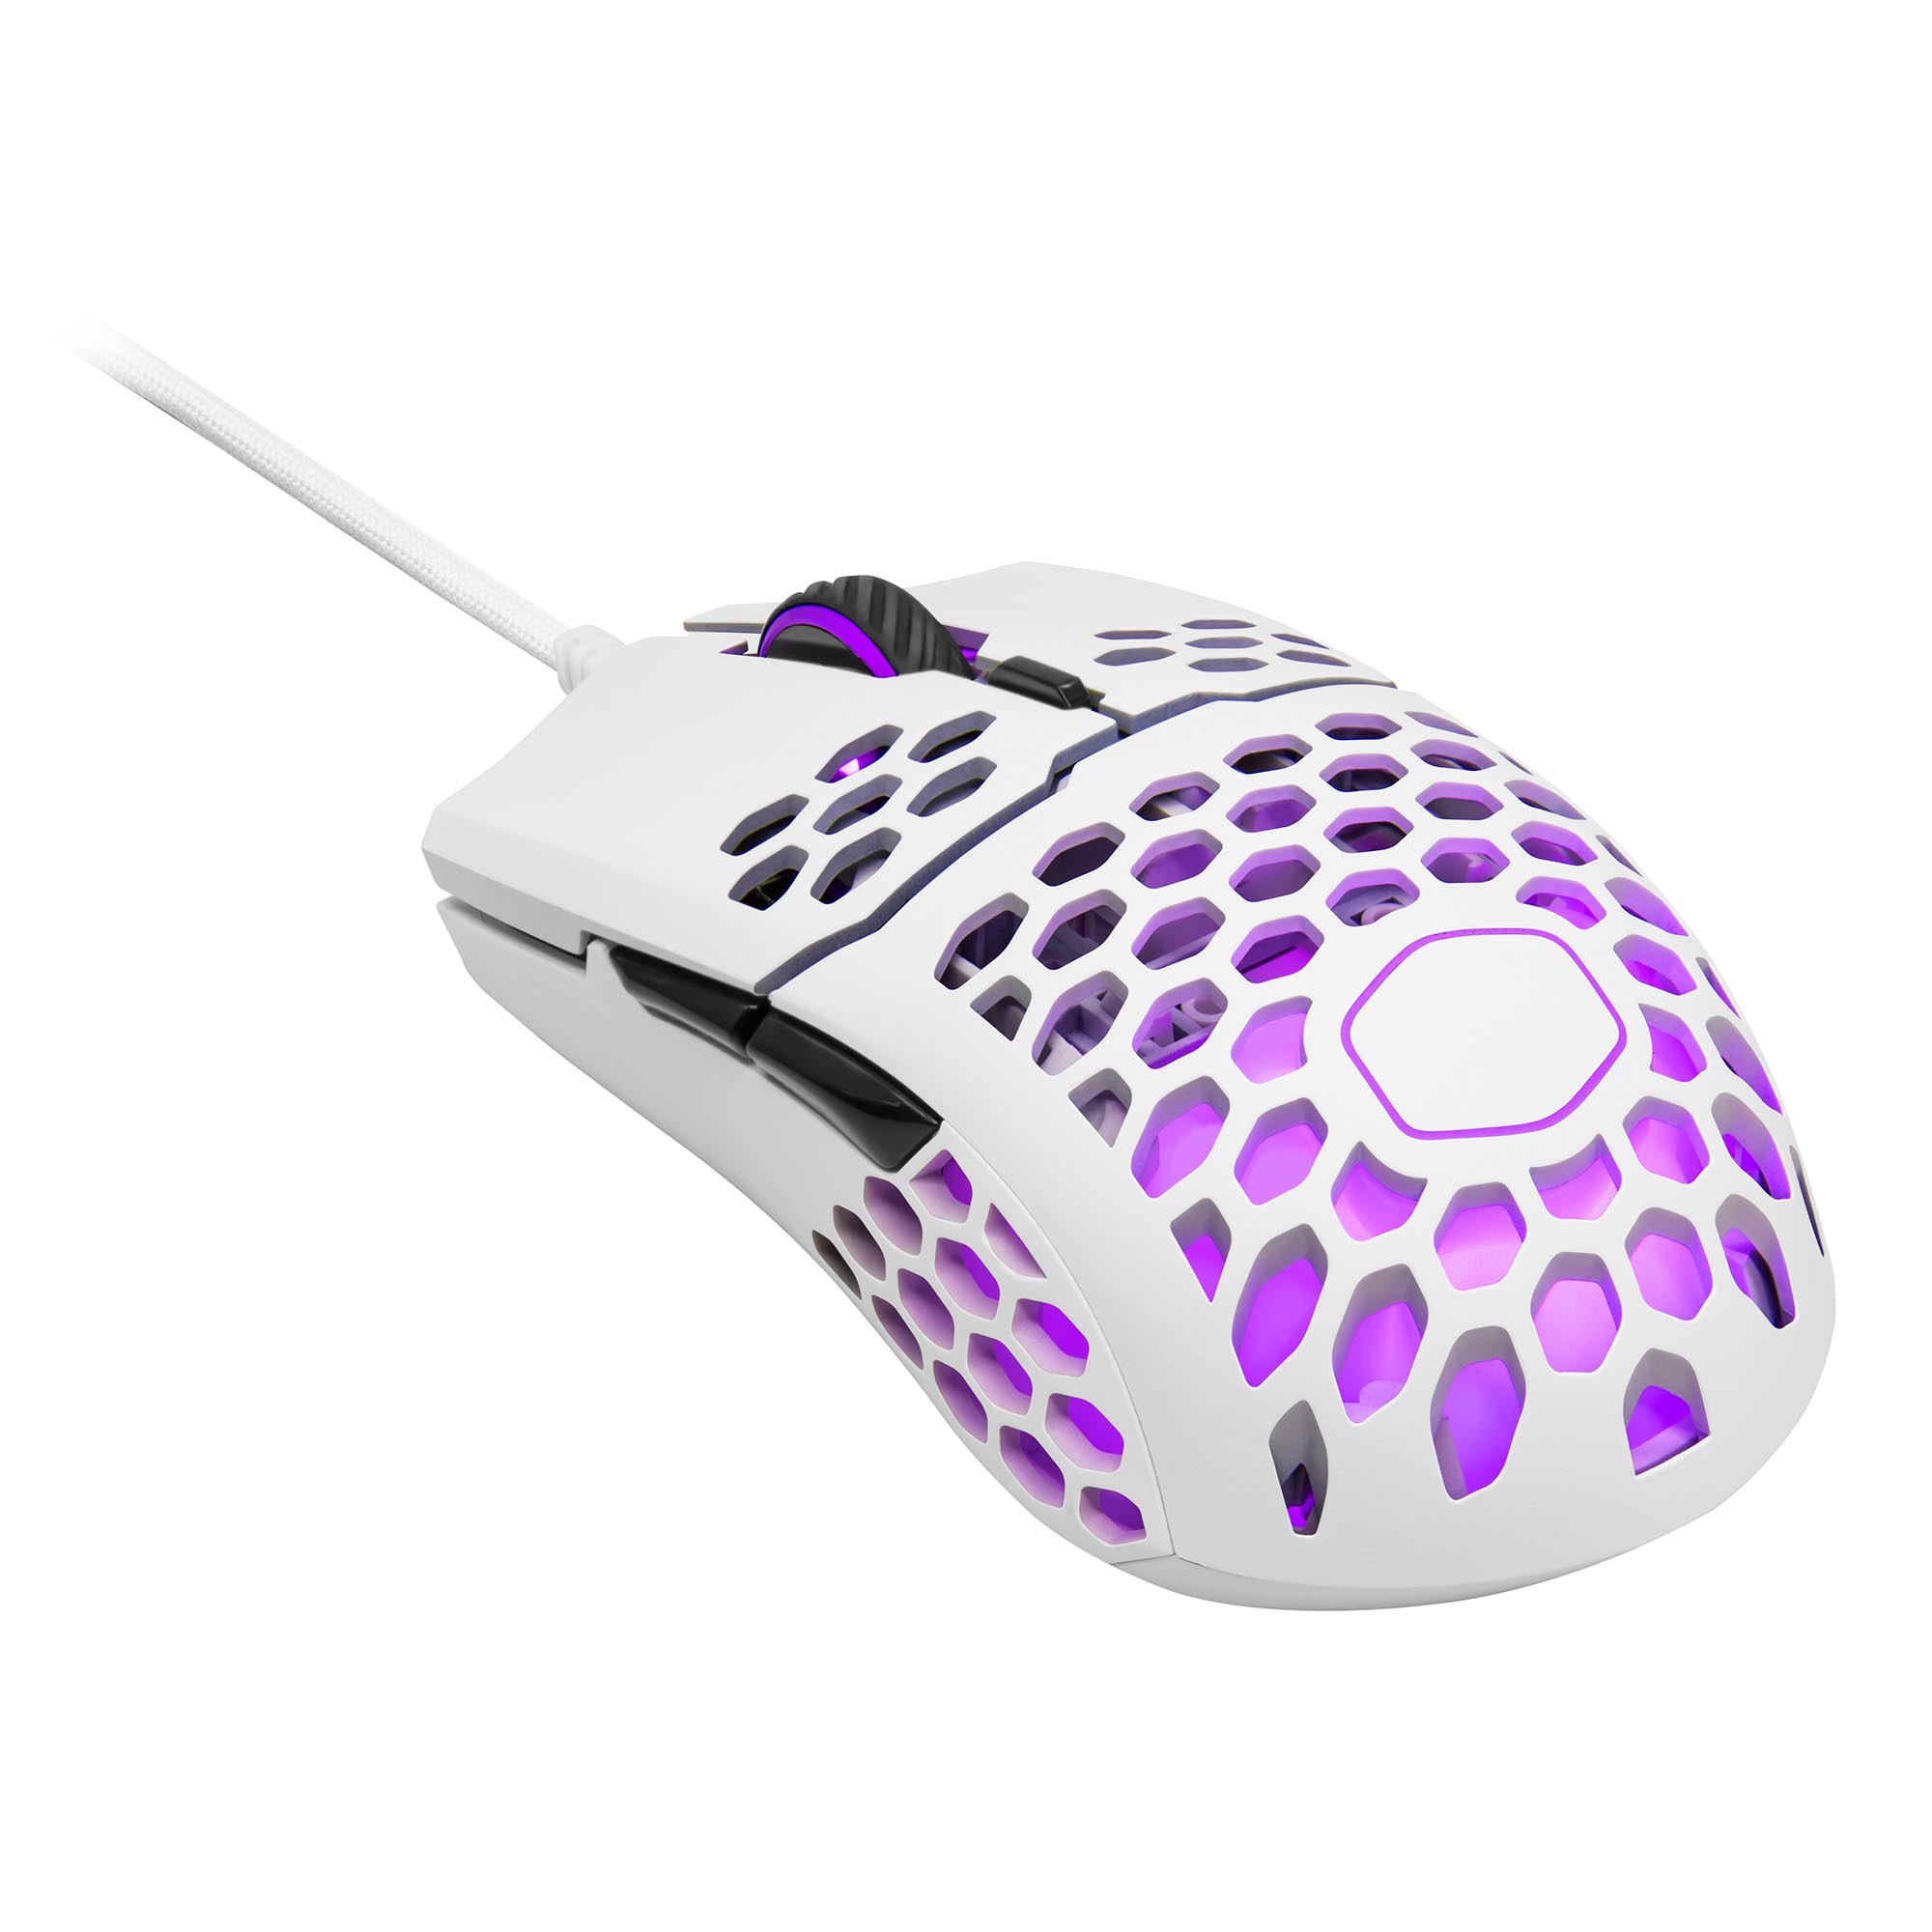 Cooler Master MM711: il nuovo mouse da gaming